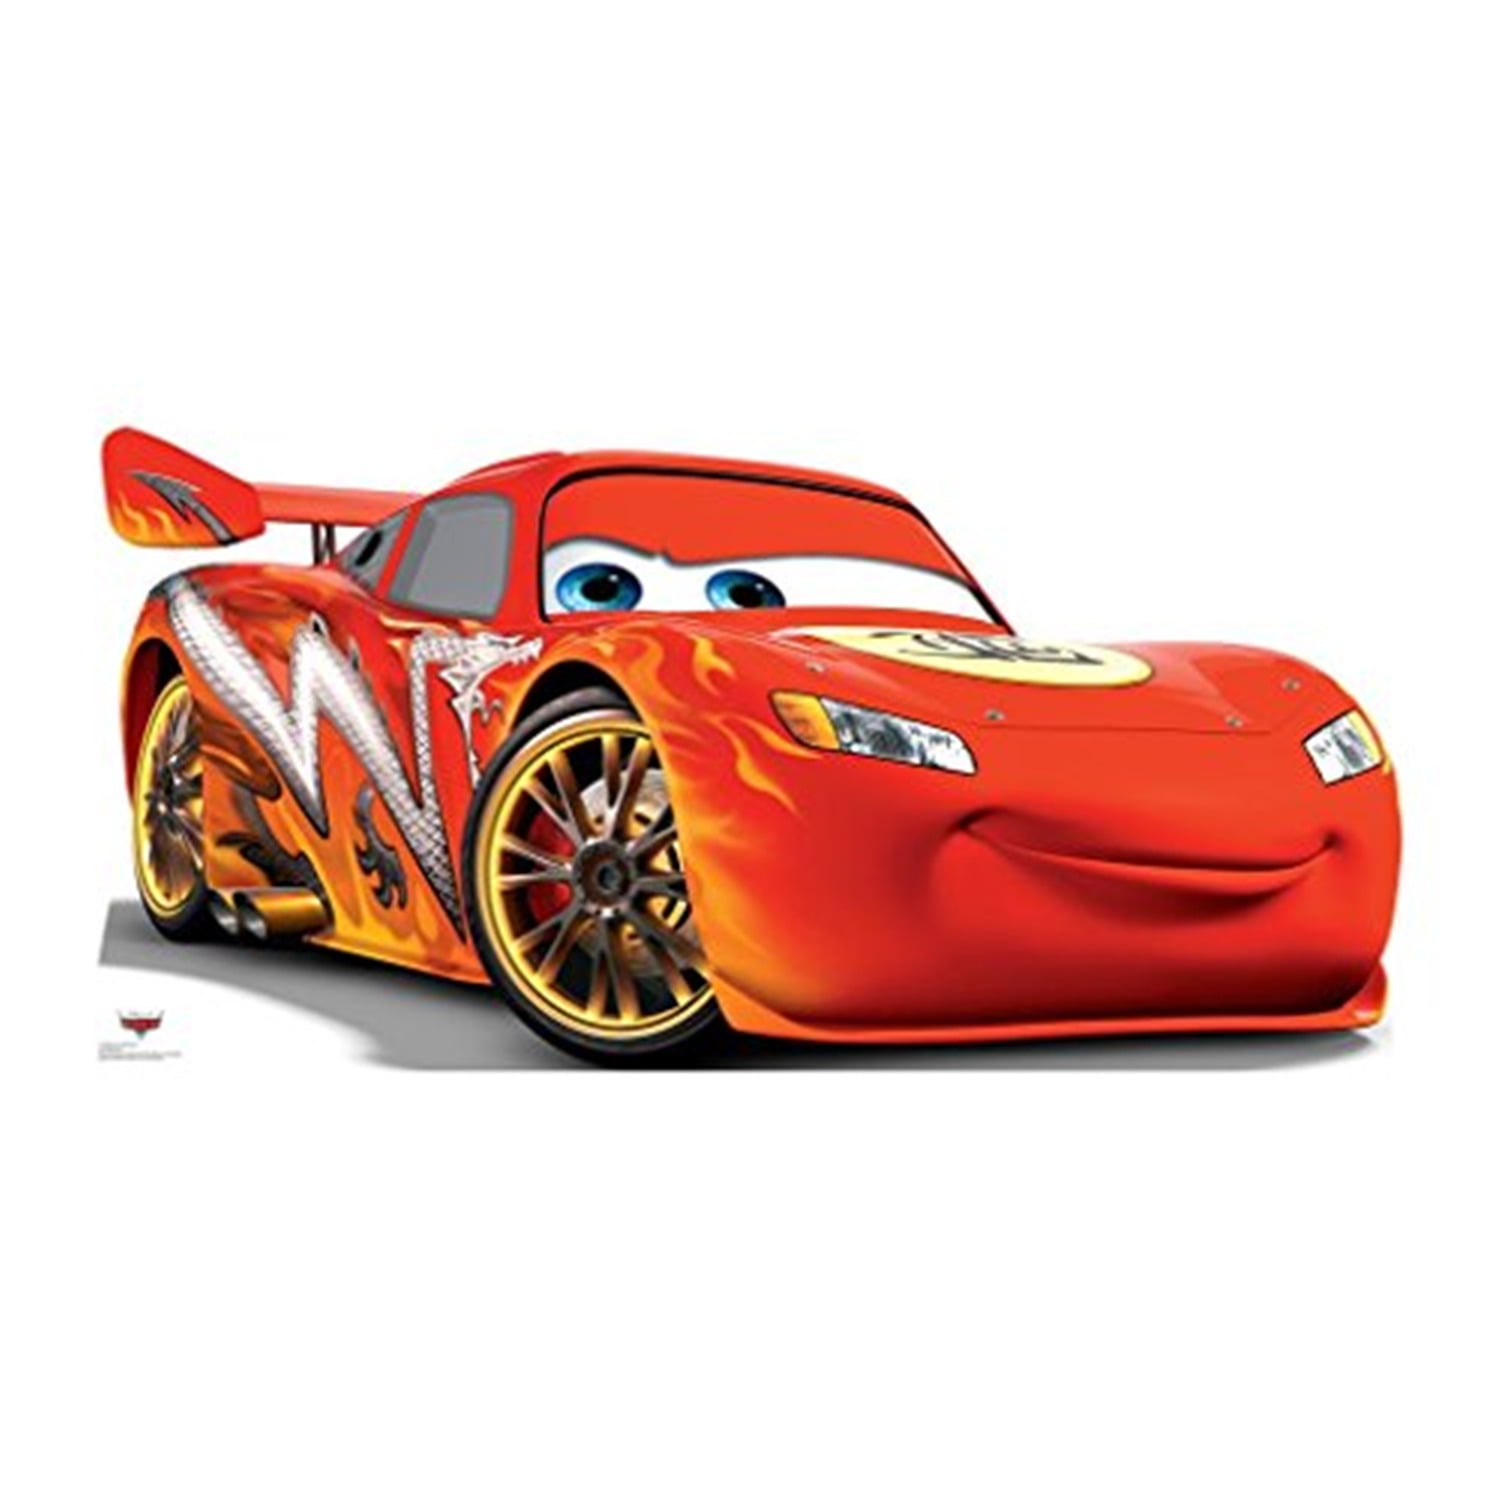 Lightning McQueen (Disney's Cars)-Size:68 x 28 